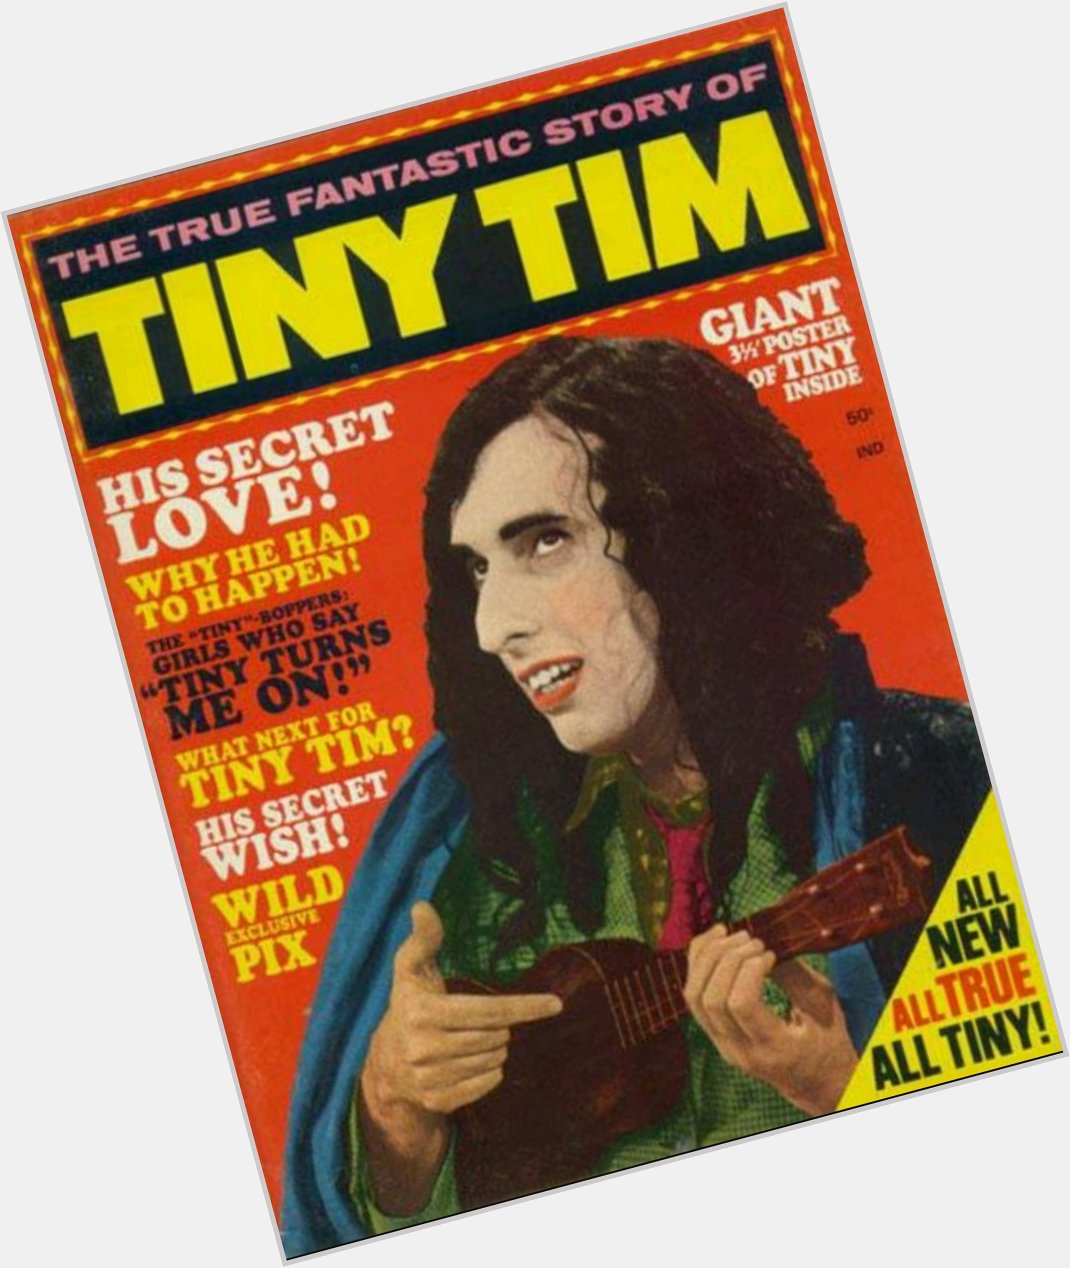 Happy birthday Tiny Tim, born 12.April 1932! 